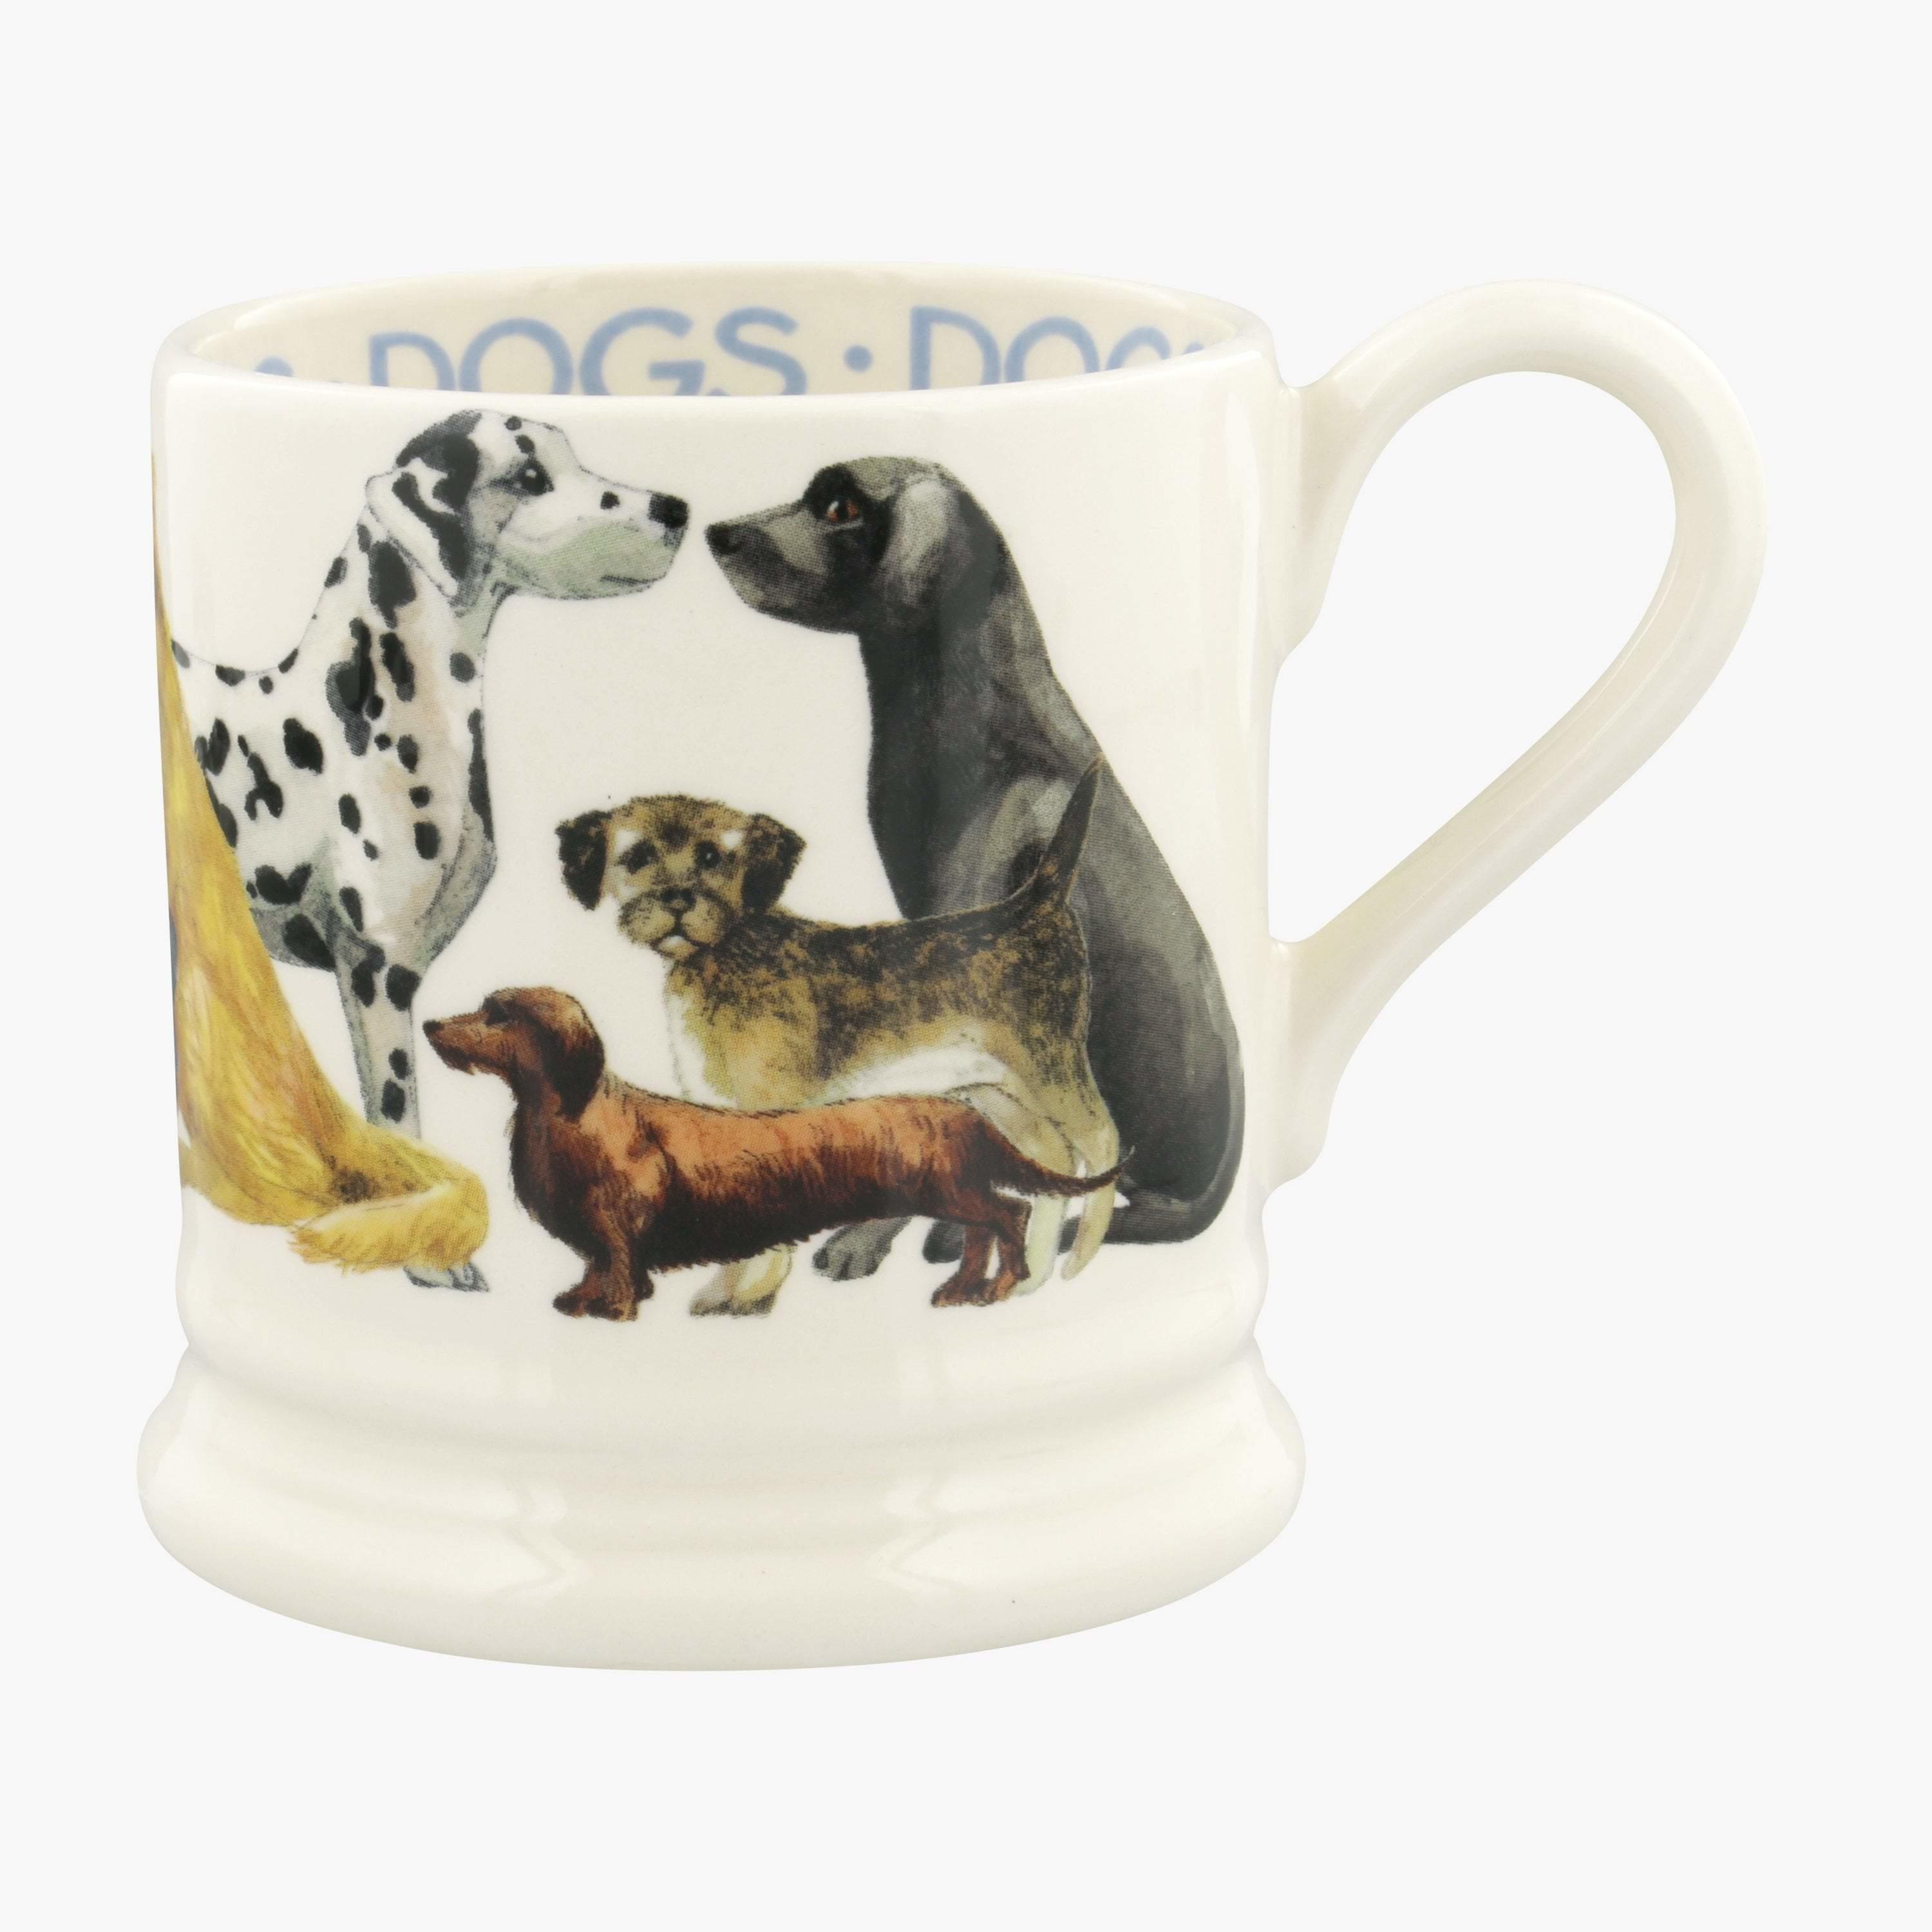 Emma Bridgewater  Seconds Dogs Dogs All Over 1/2 Pint Mug - Unique Handmade & Handpainted English Earthenware Tea/Coffee Mug